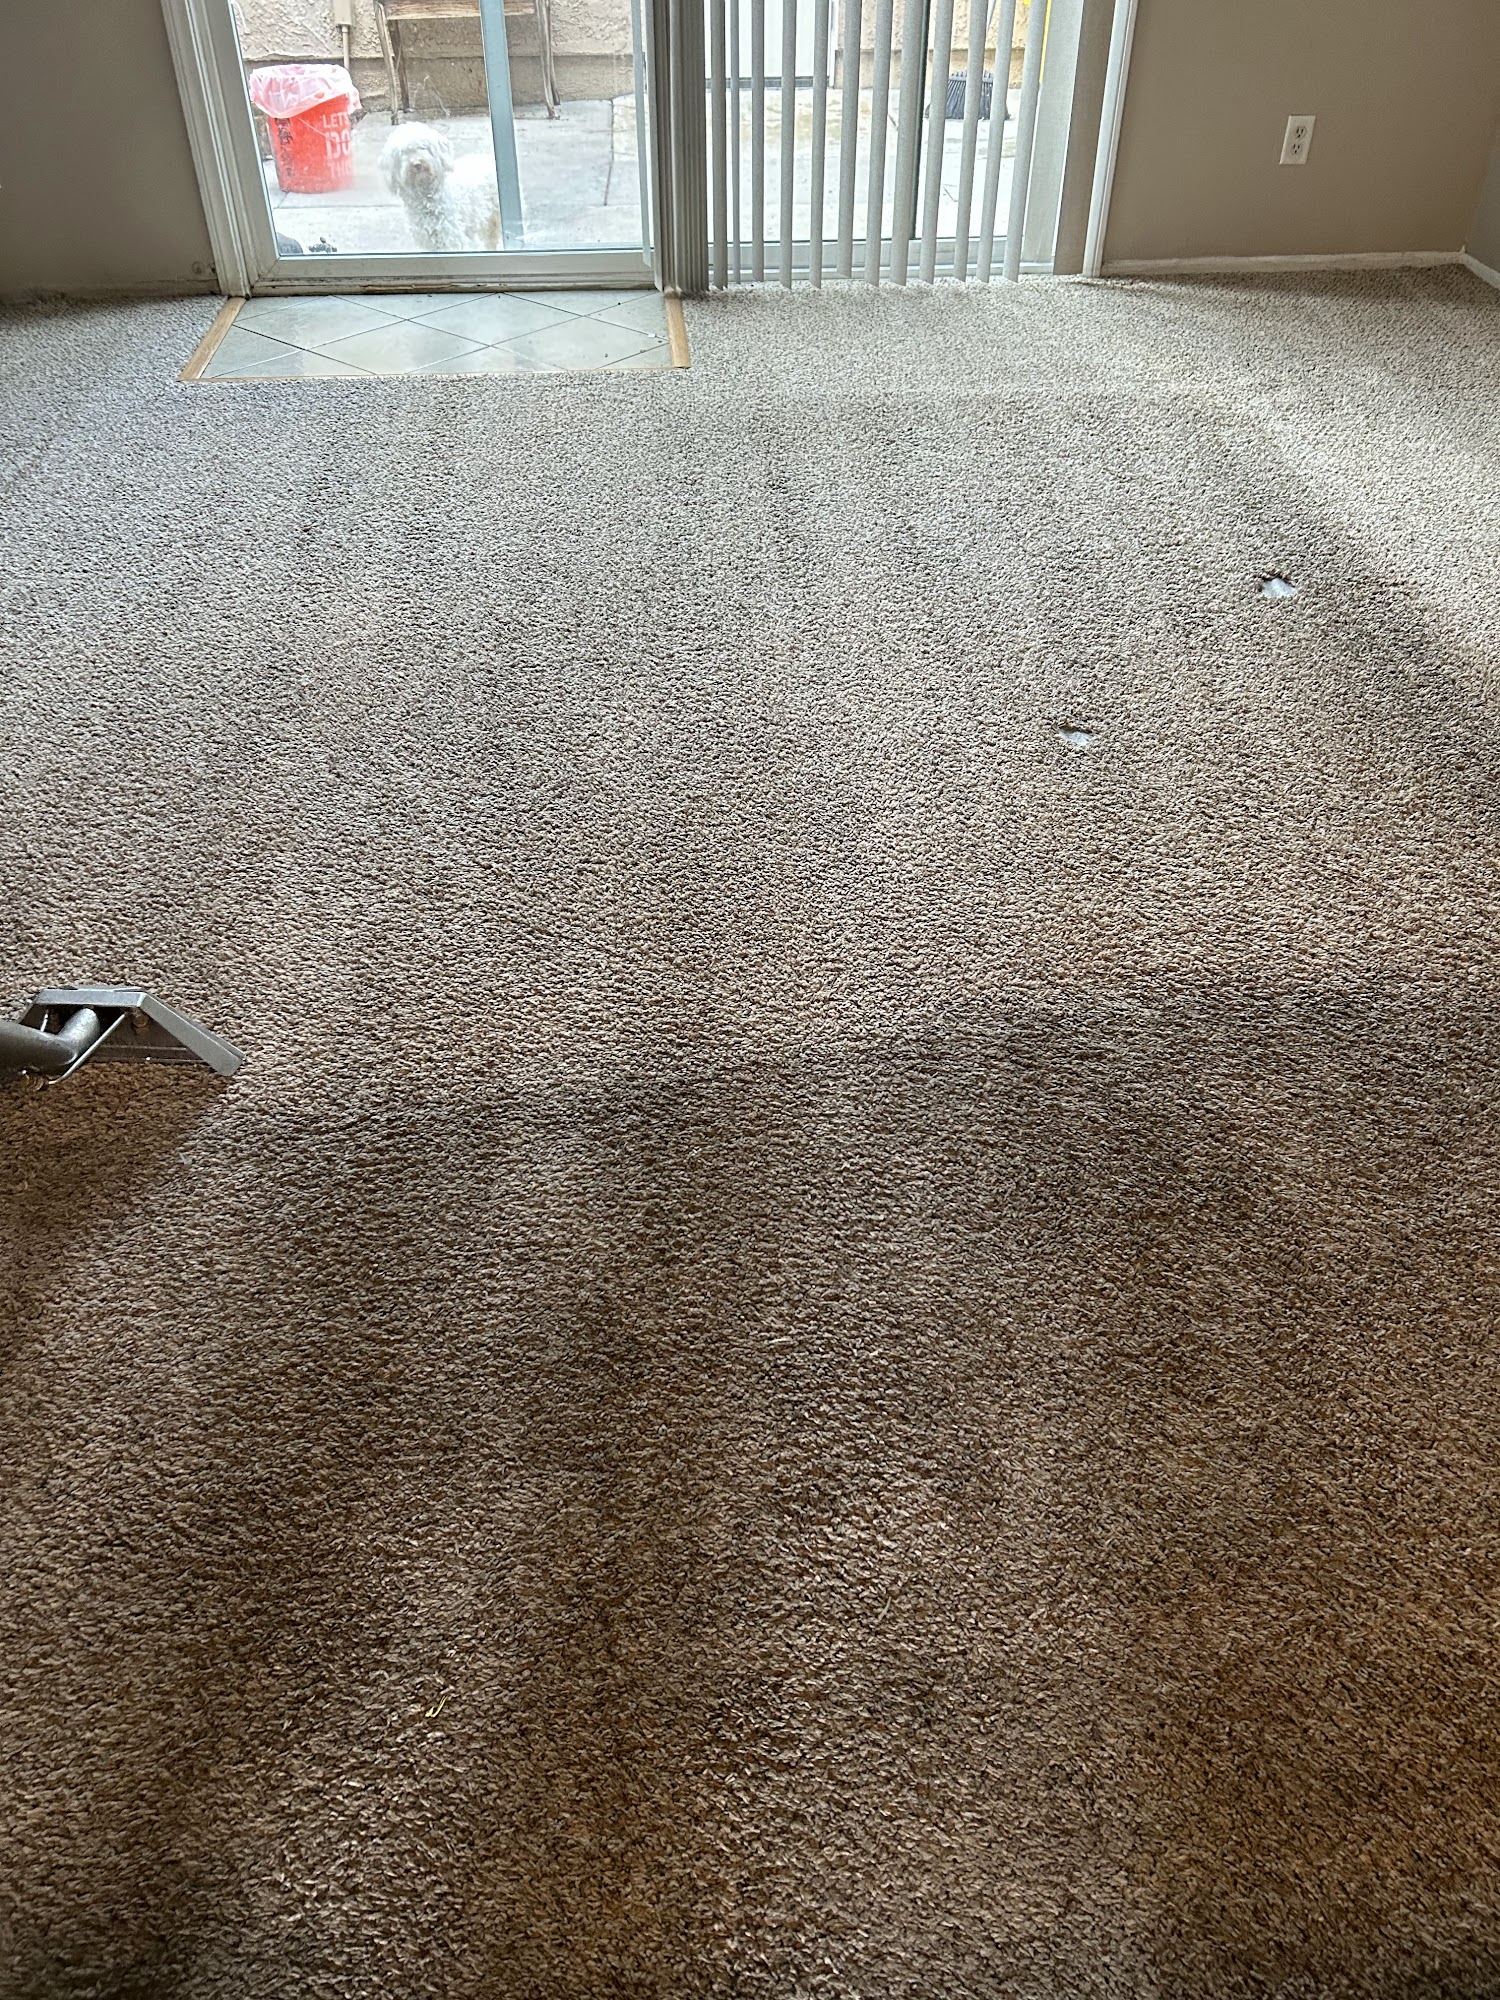 sergio's carpet cleaning